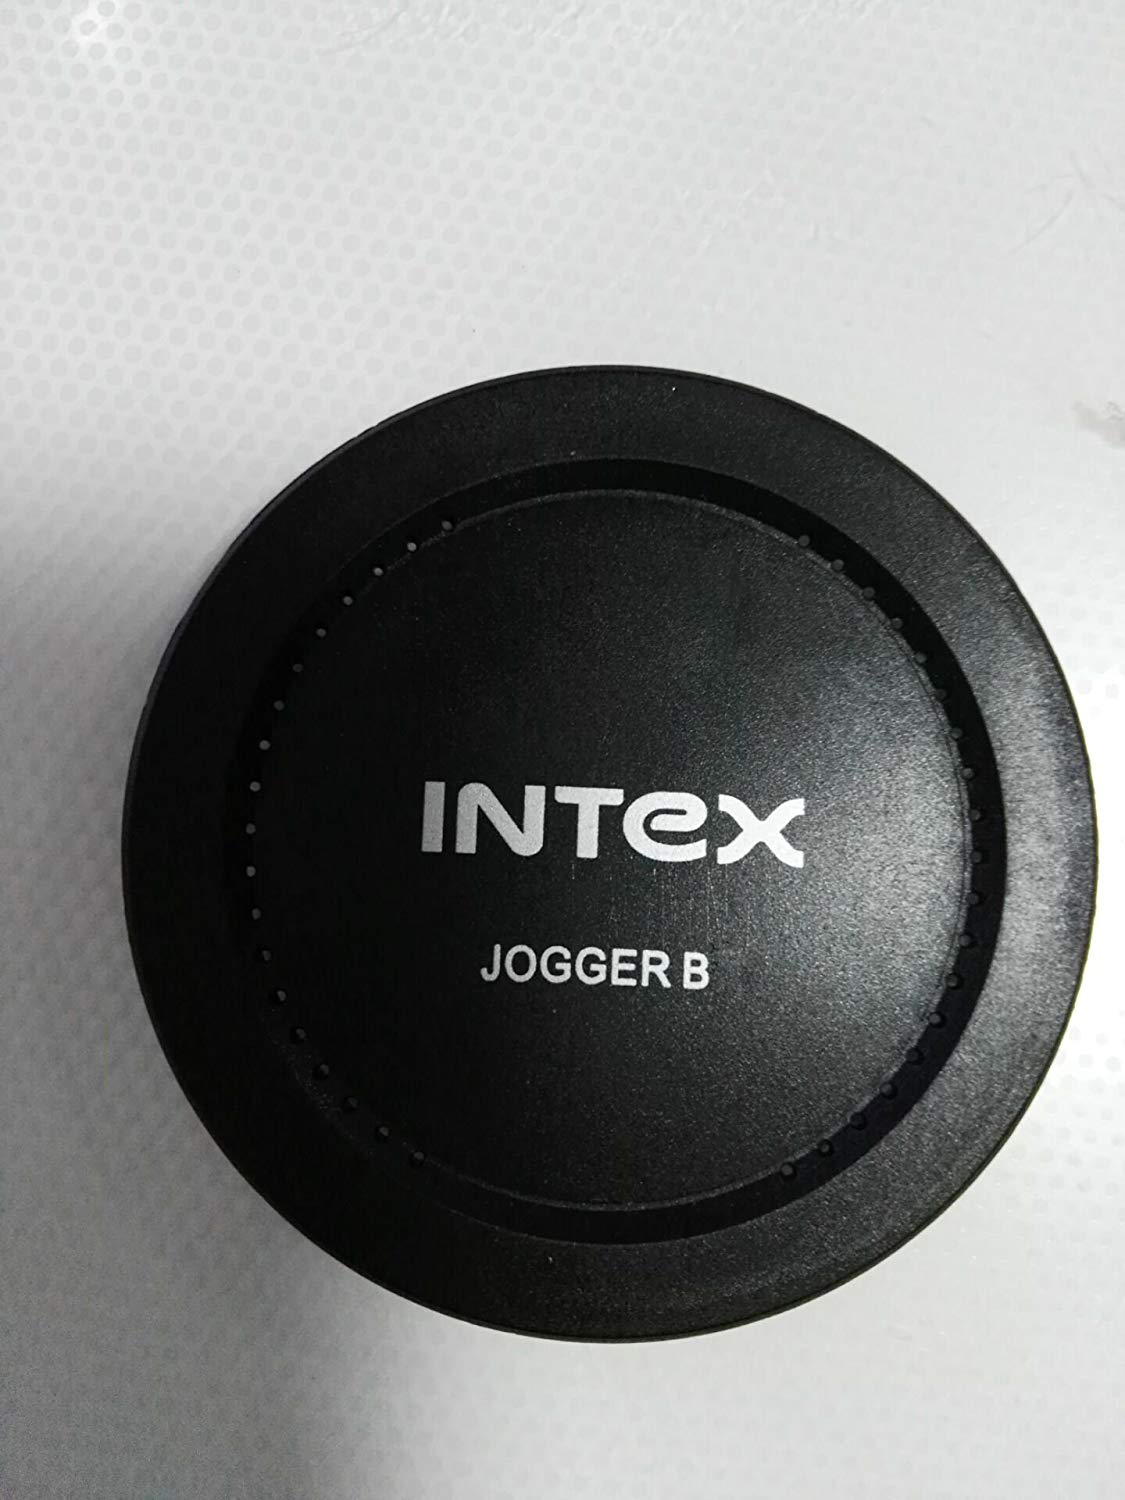 intex jogger b headphone price